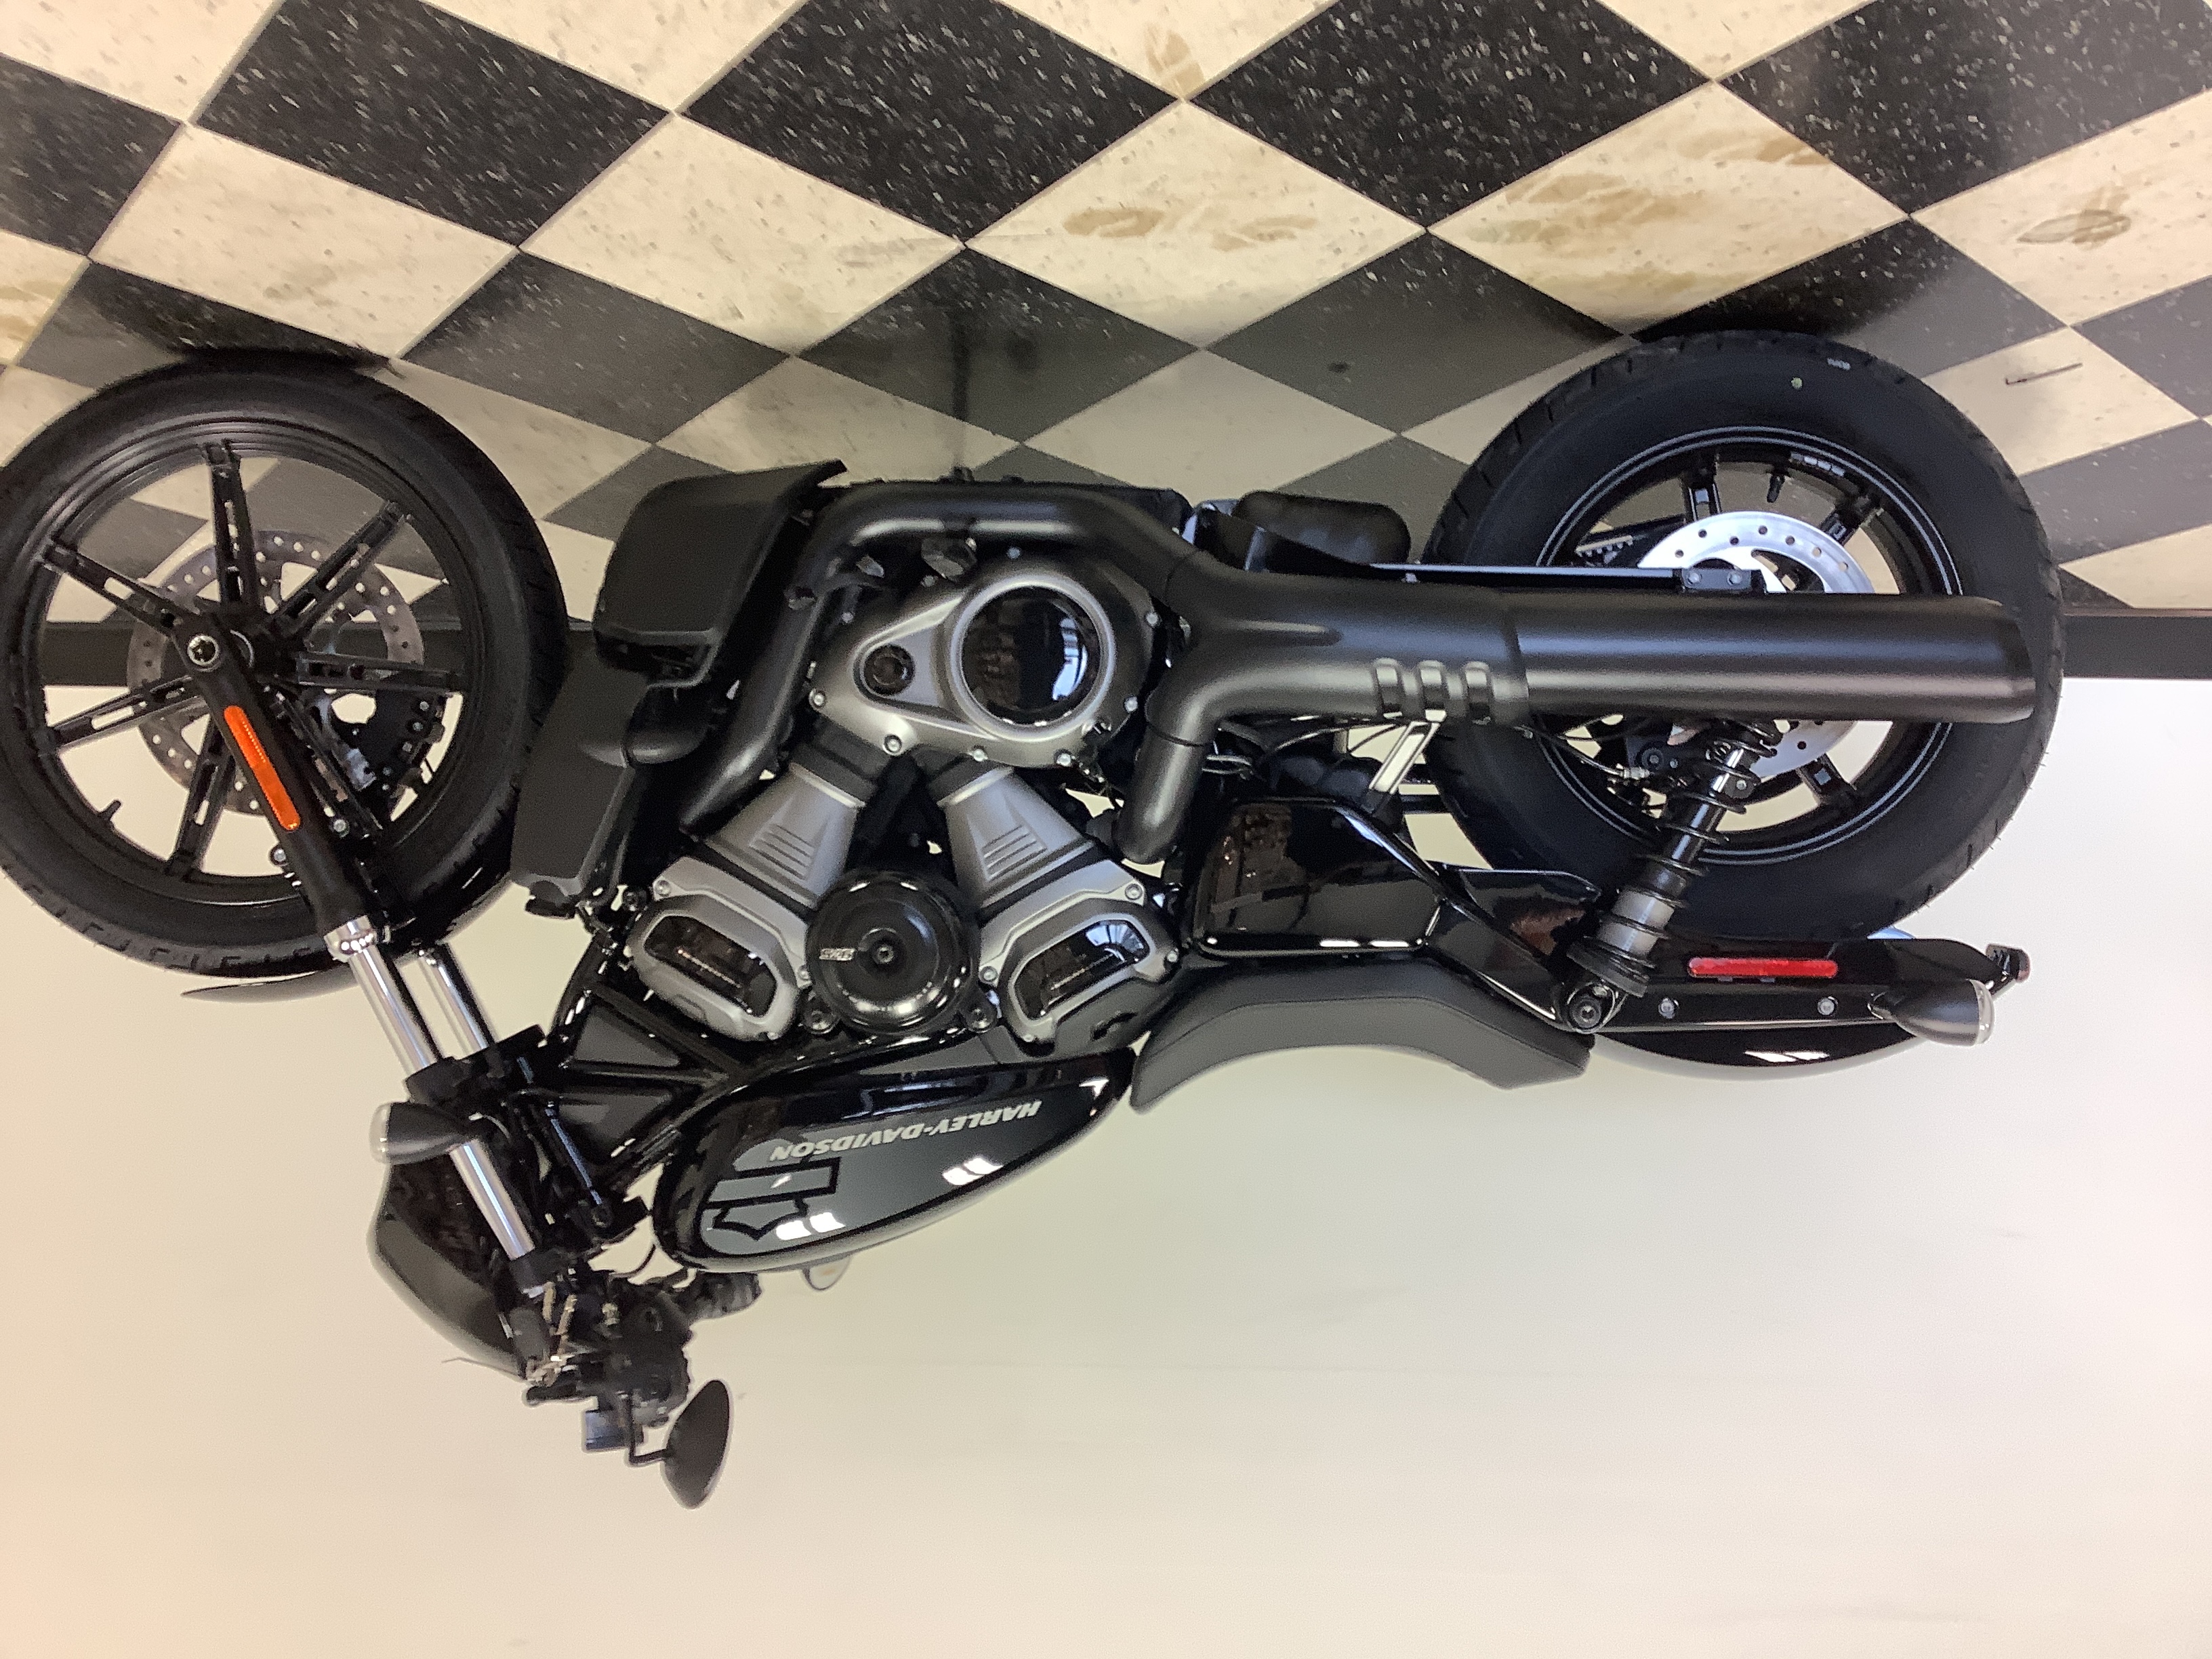 2022 Harley-Davidson Sportster Nightster at Deluxe Harley Davidson